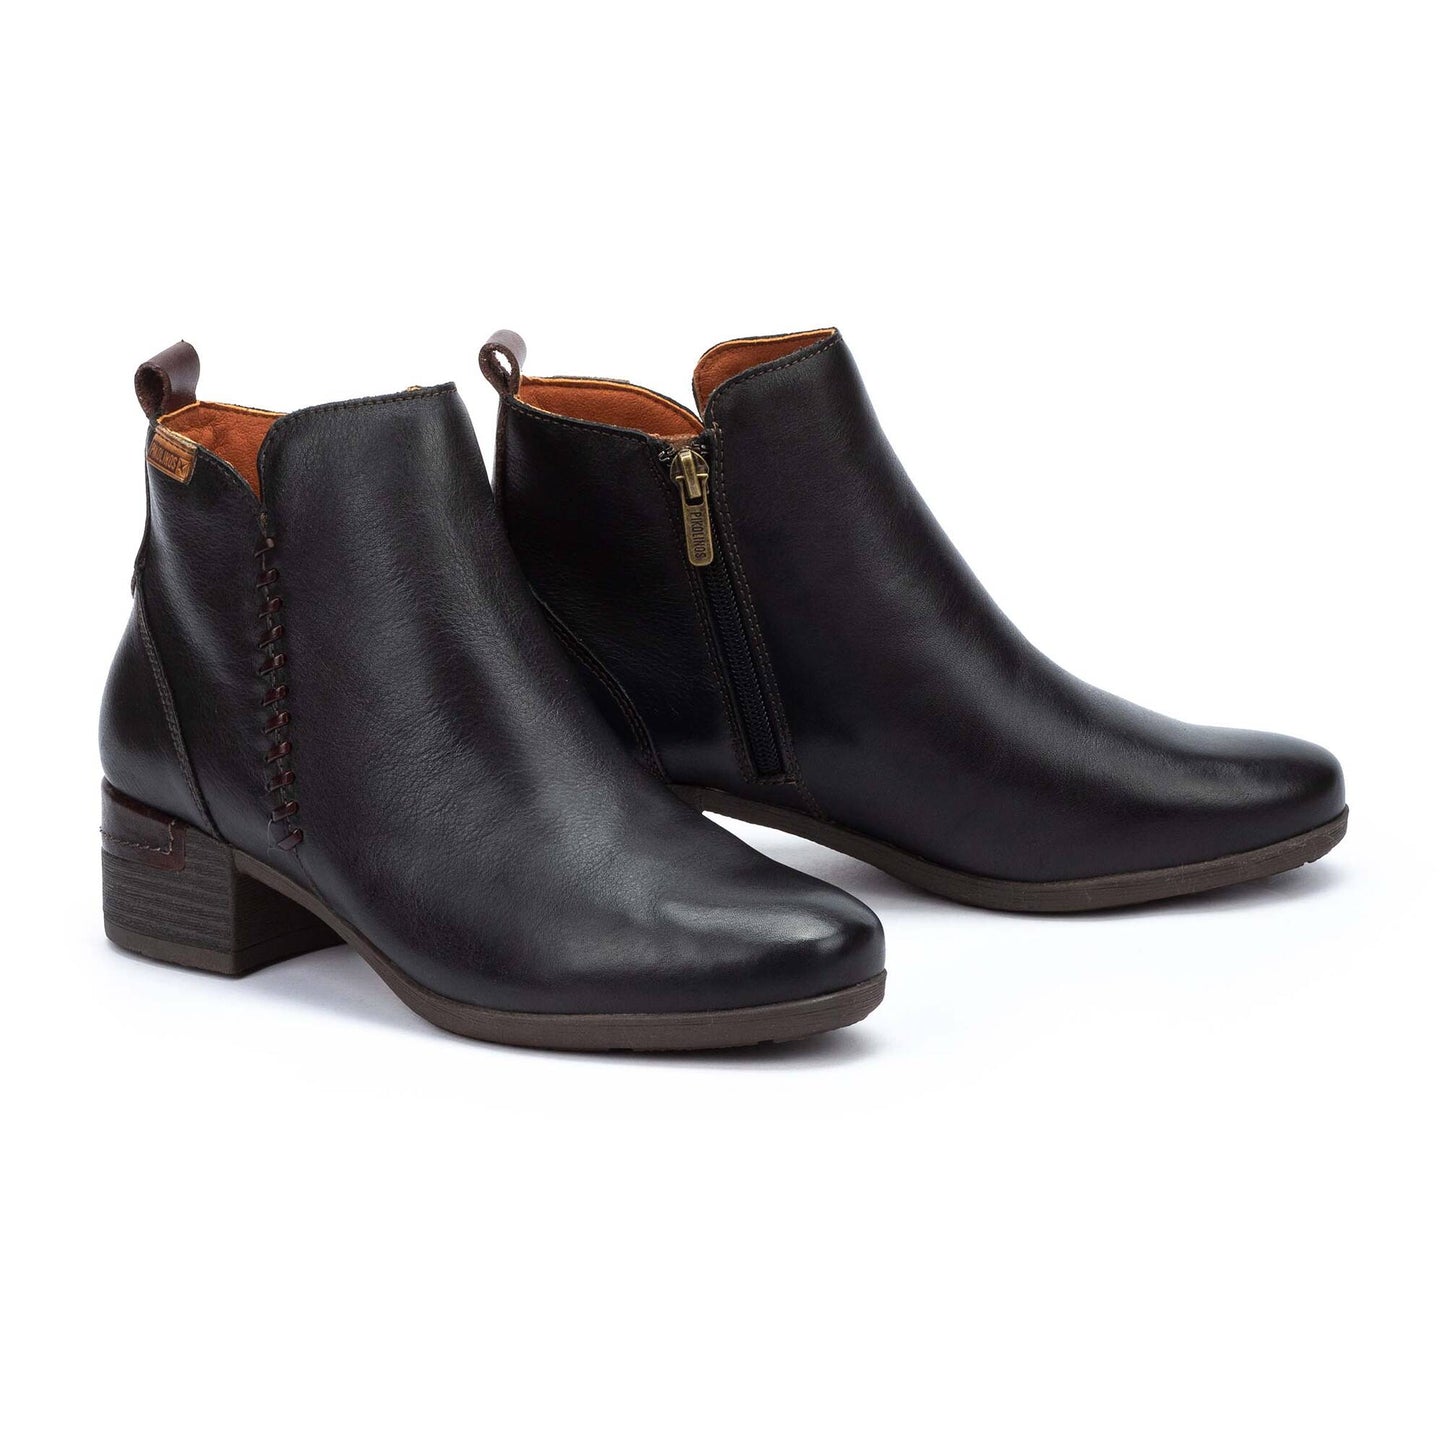 Pikolinos Women's Malaga W6W-8950 Leather Ankle Boots Black